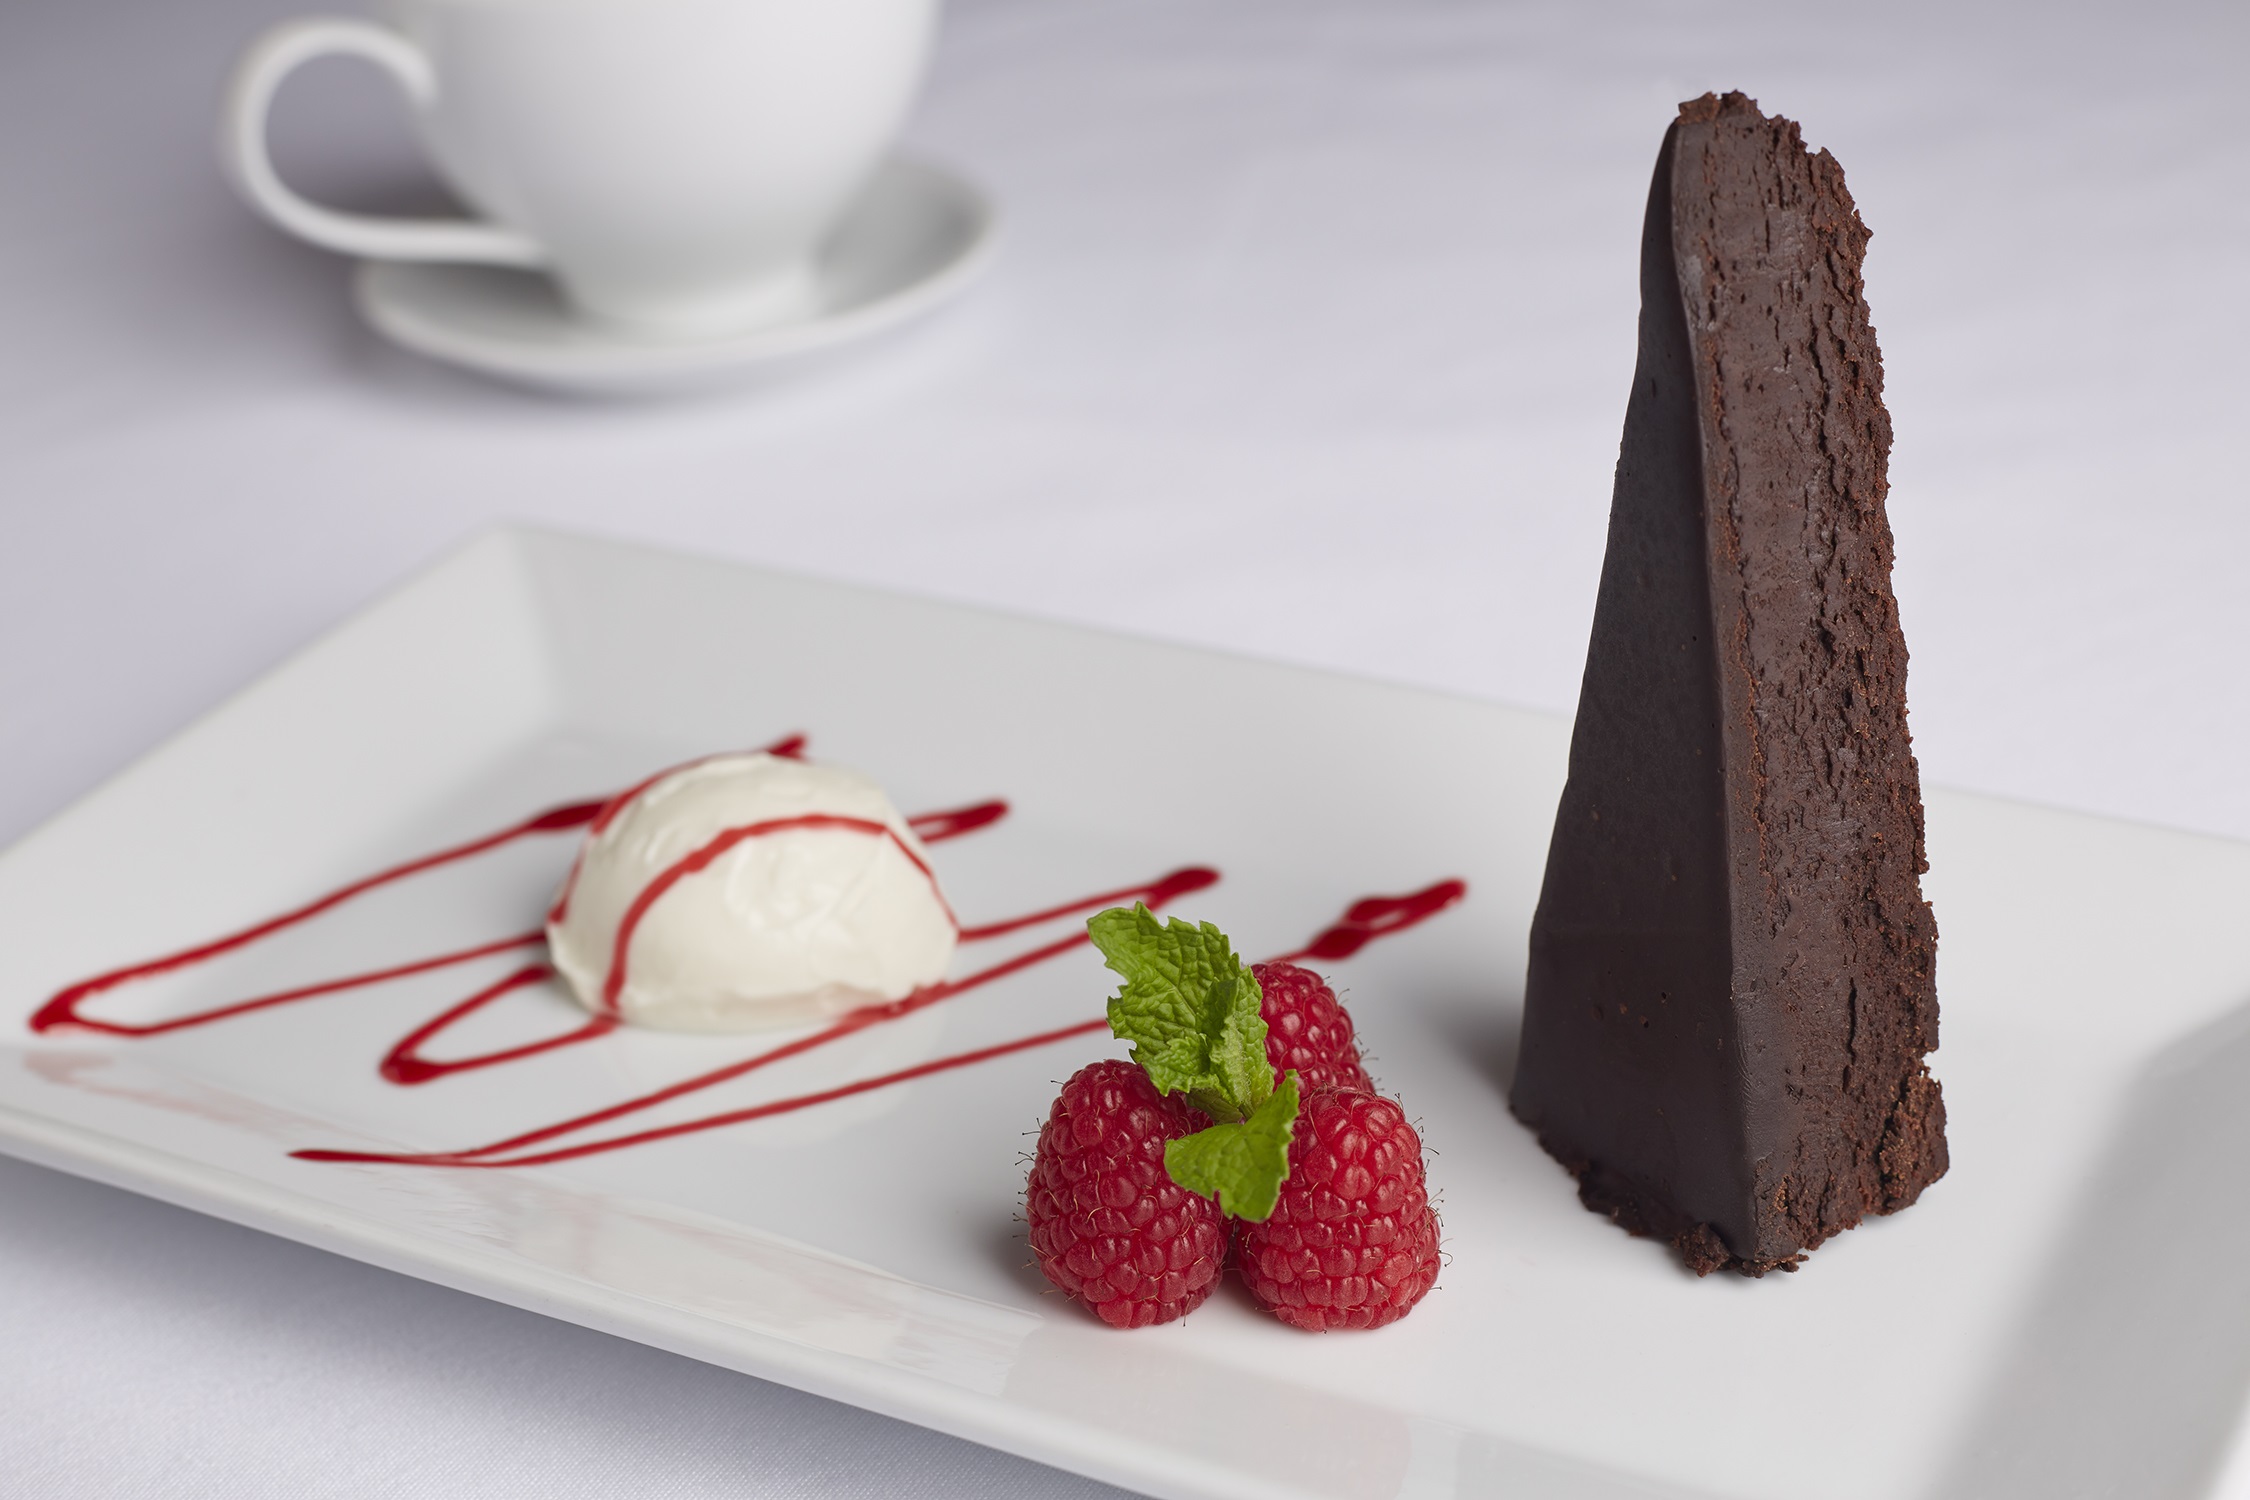 Flourless chocolate cake, ice cream, and raspberries at Oro Restaurant and Bar.